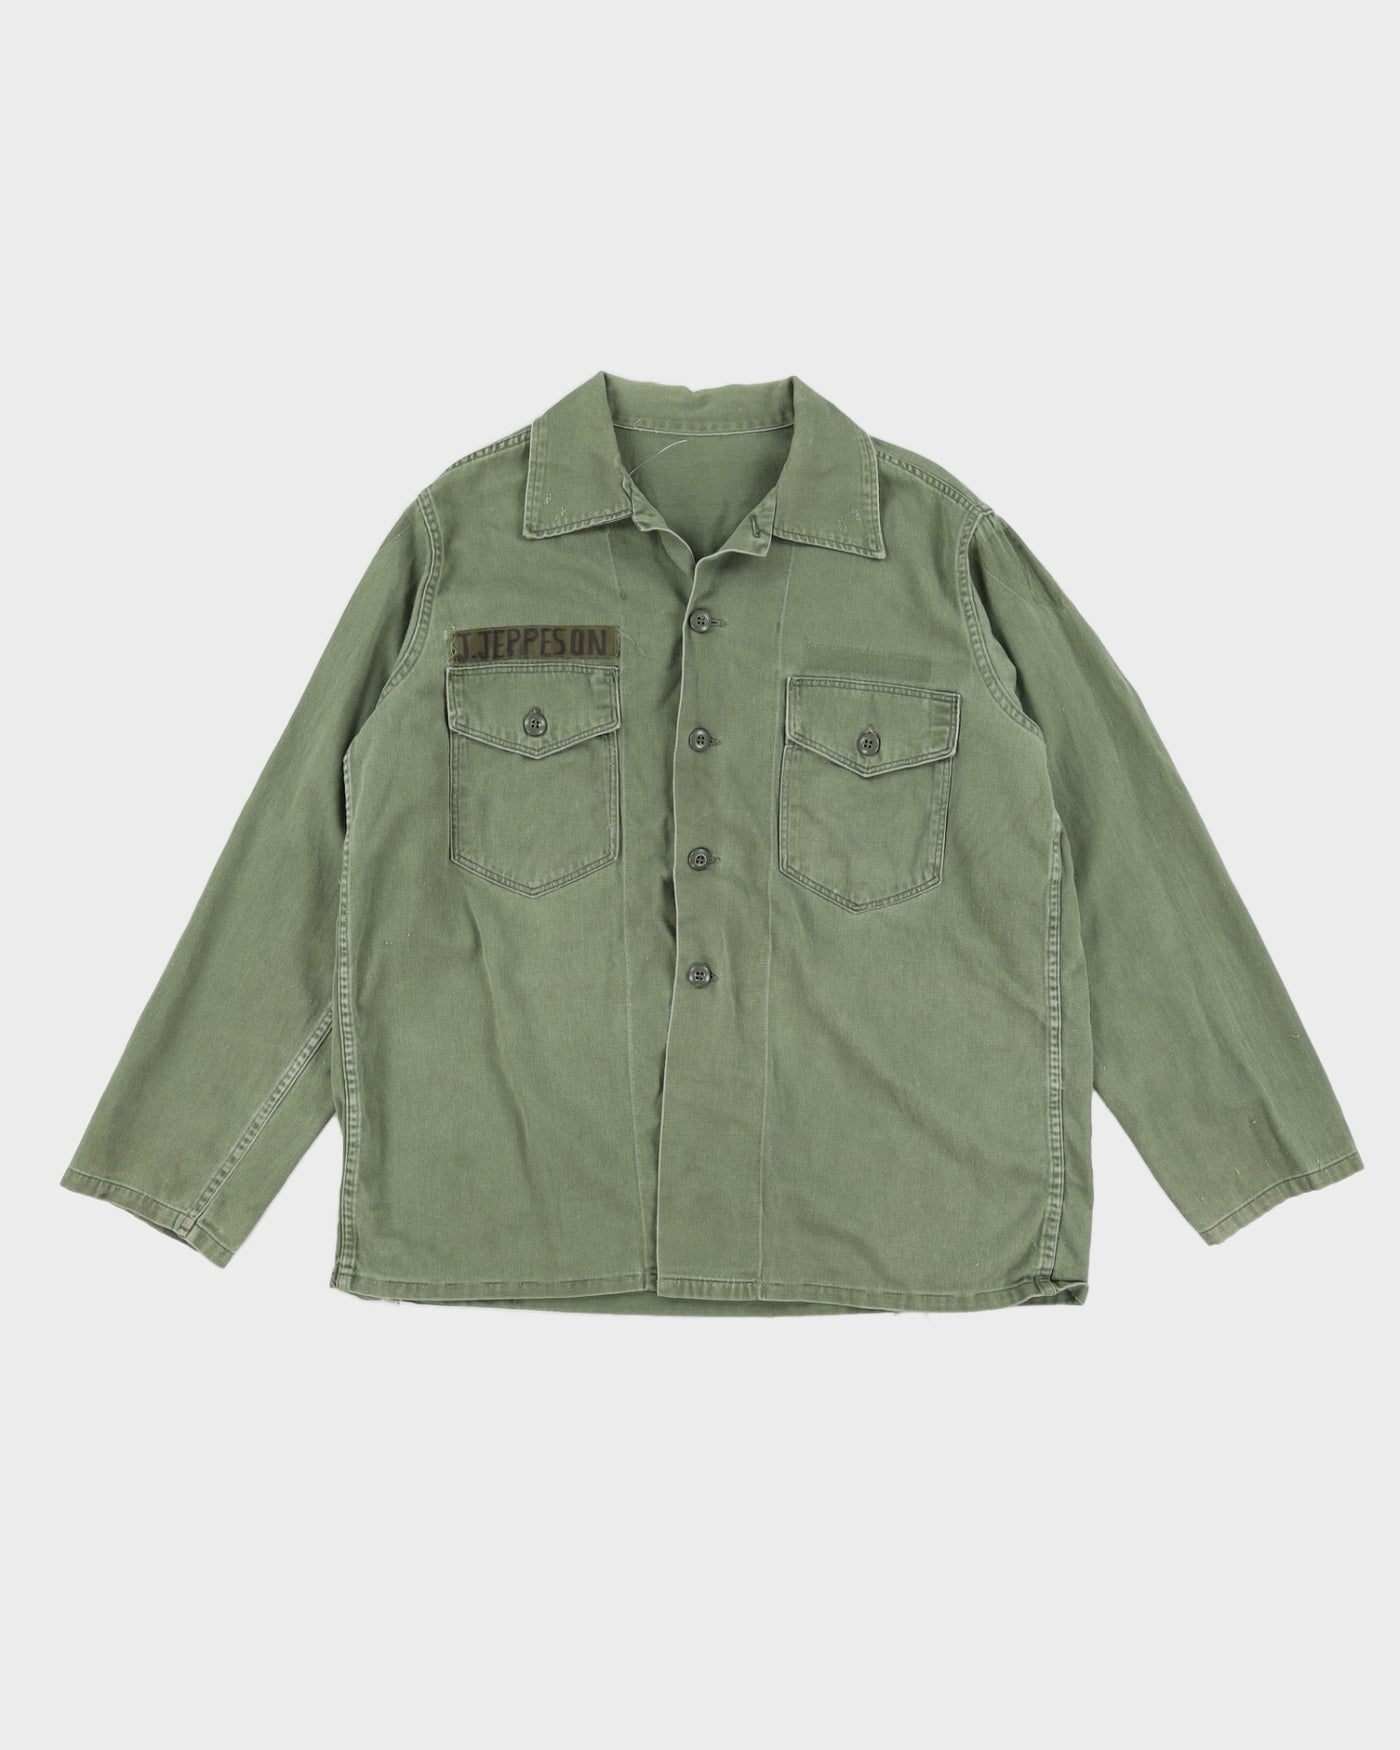 60s Vintage US Army OG-107 Shirt - XL